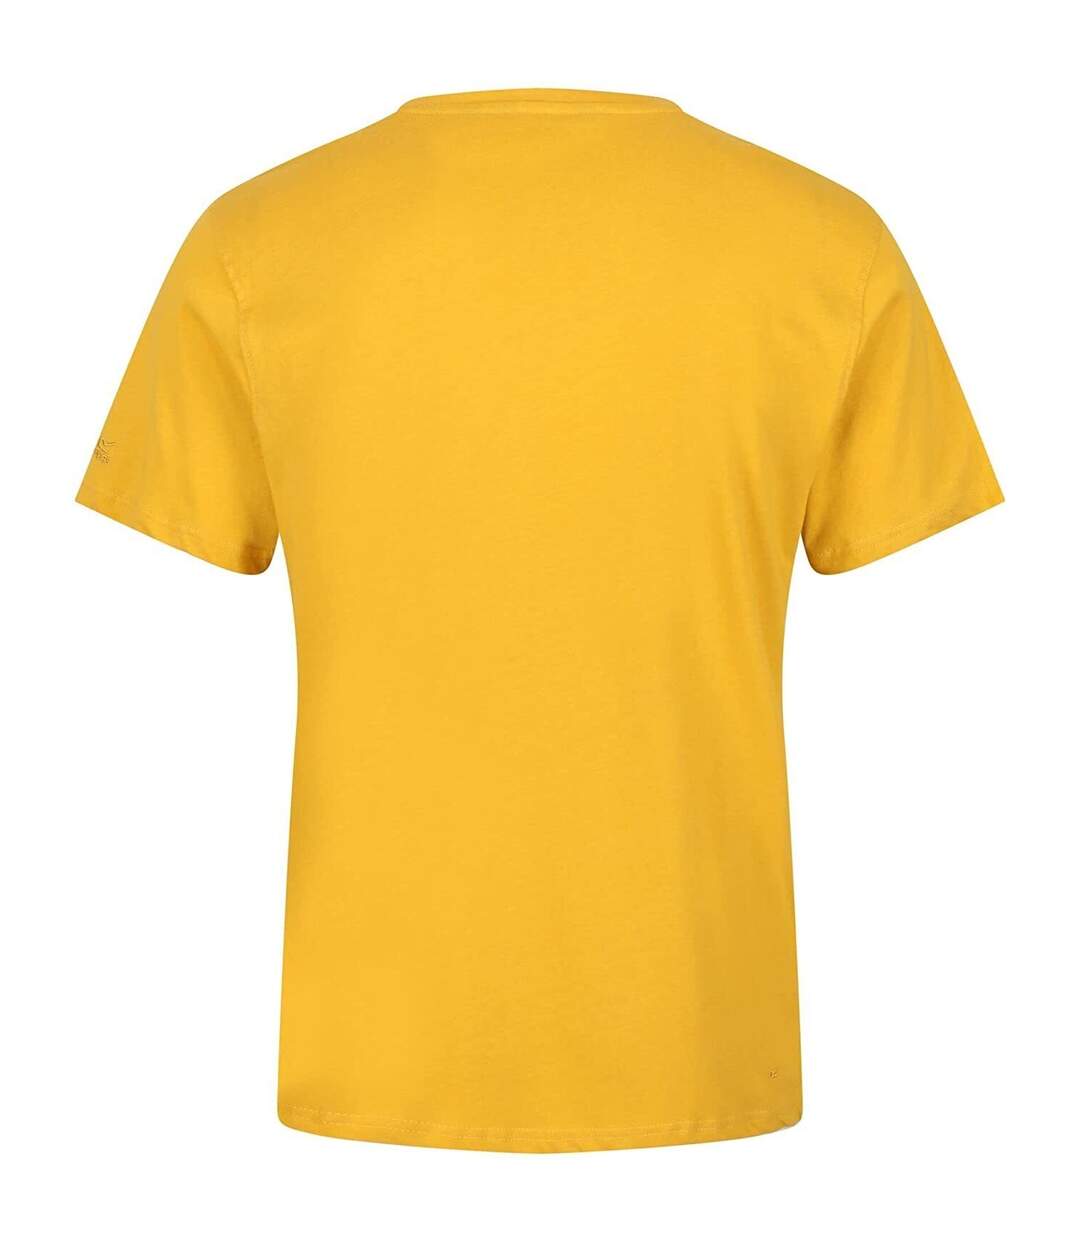 Regatta - T-shirt CLINE - Homme (Jaune) - UTRG6666